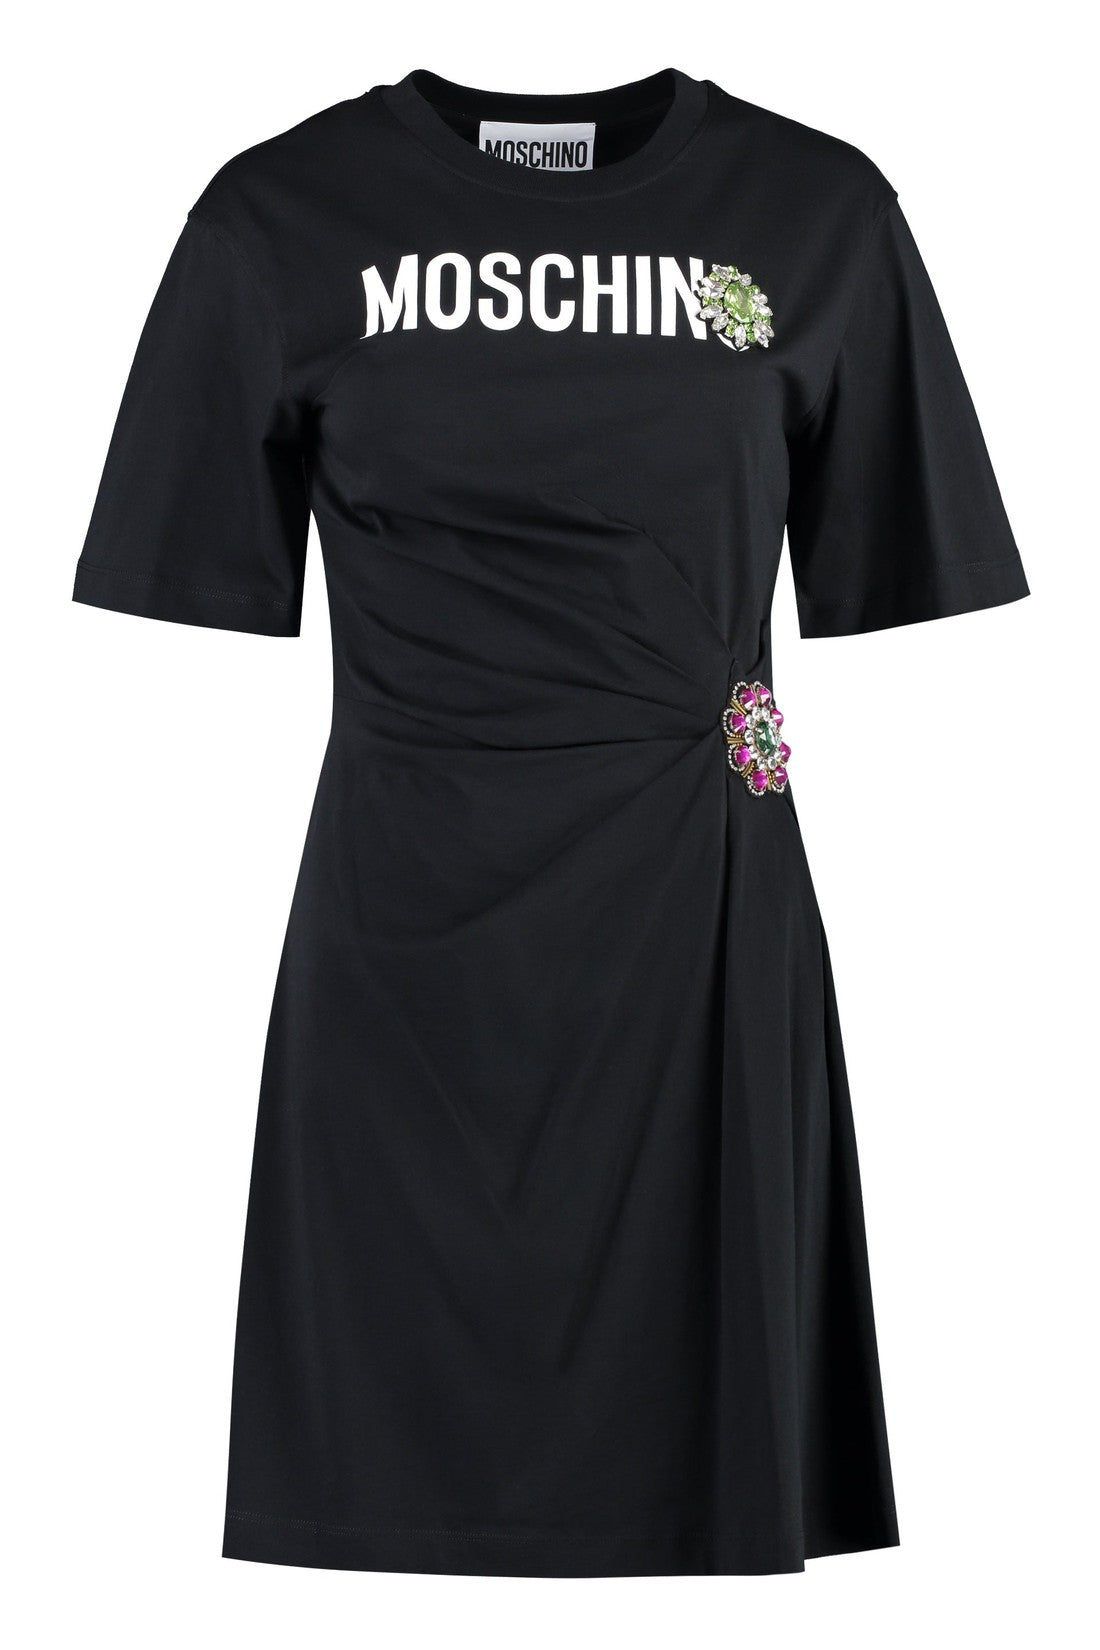 Moschino-OUTLET-SALE-Cotton mini-dress-ARCHIVIST